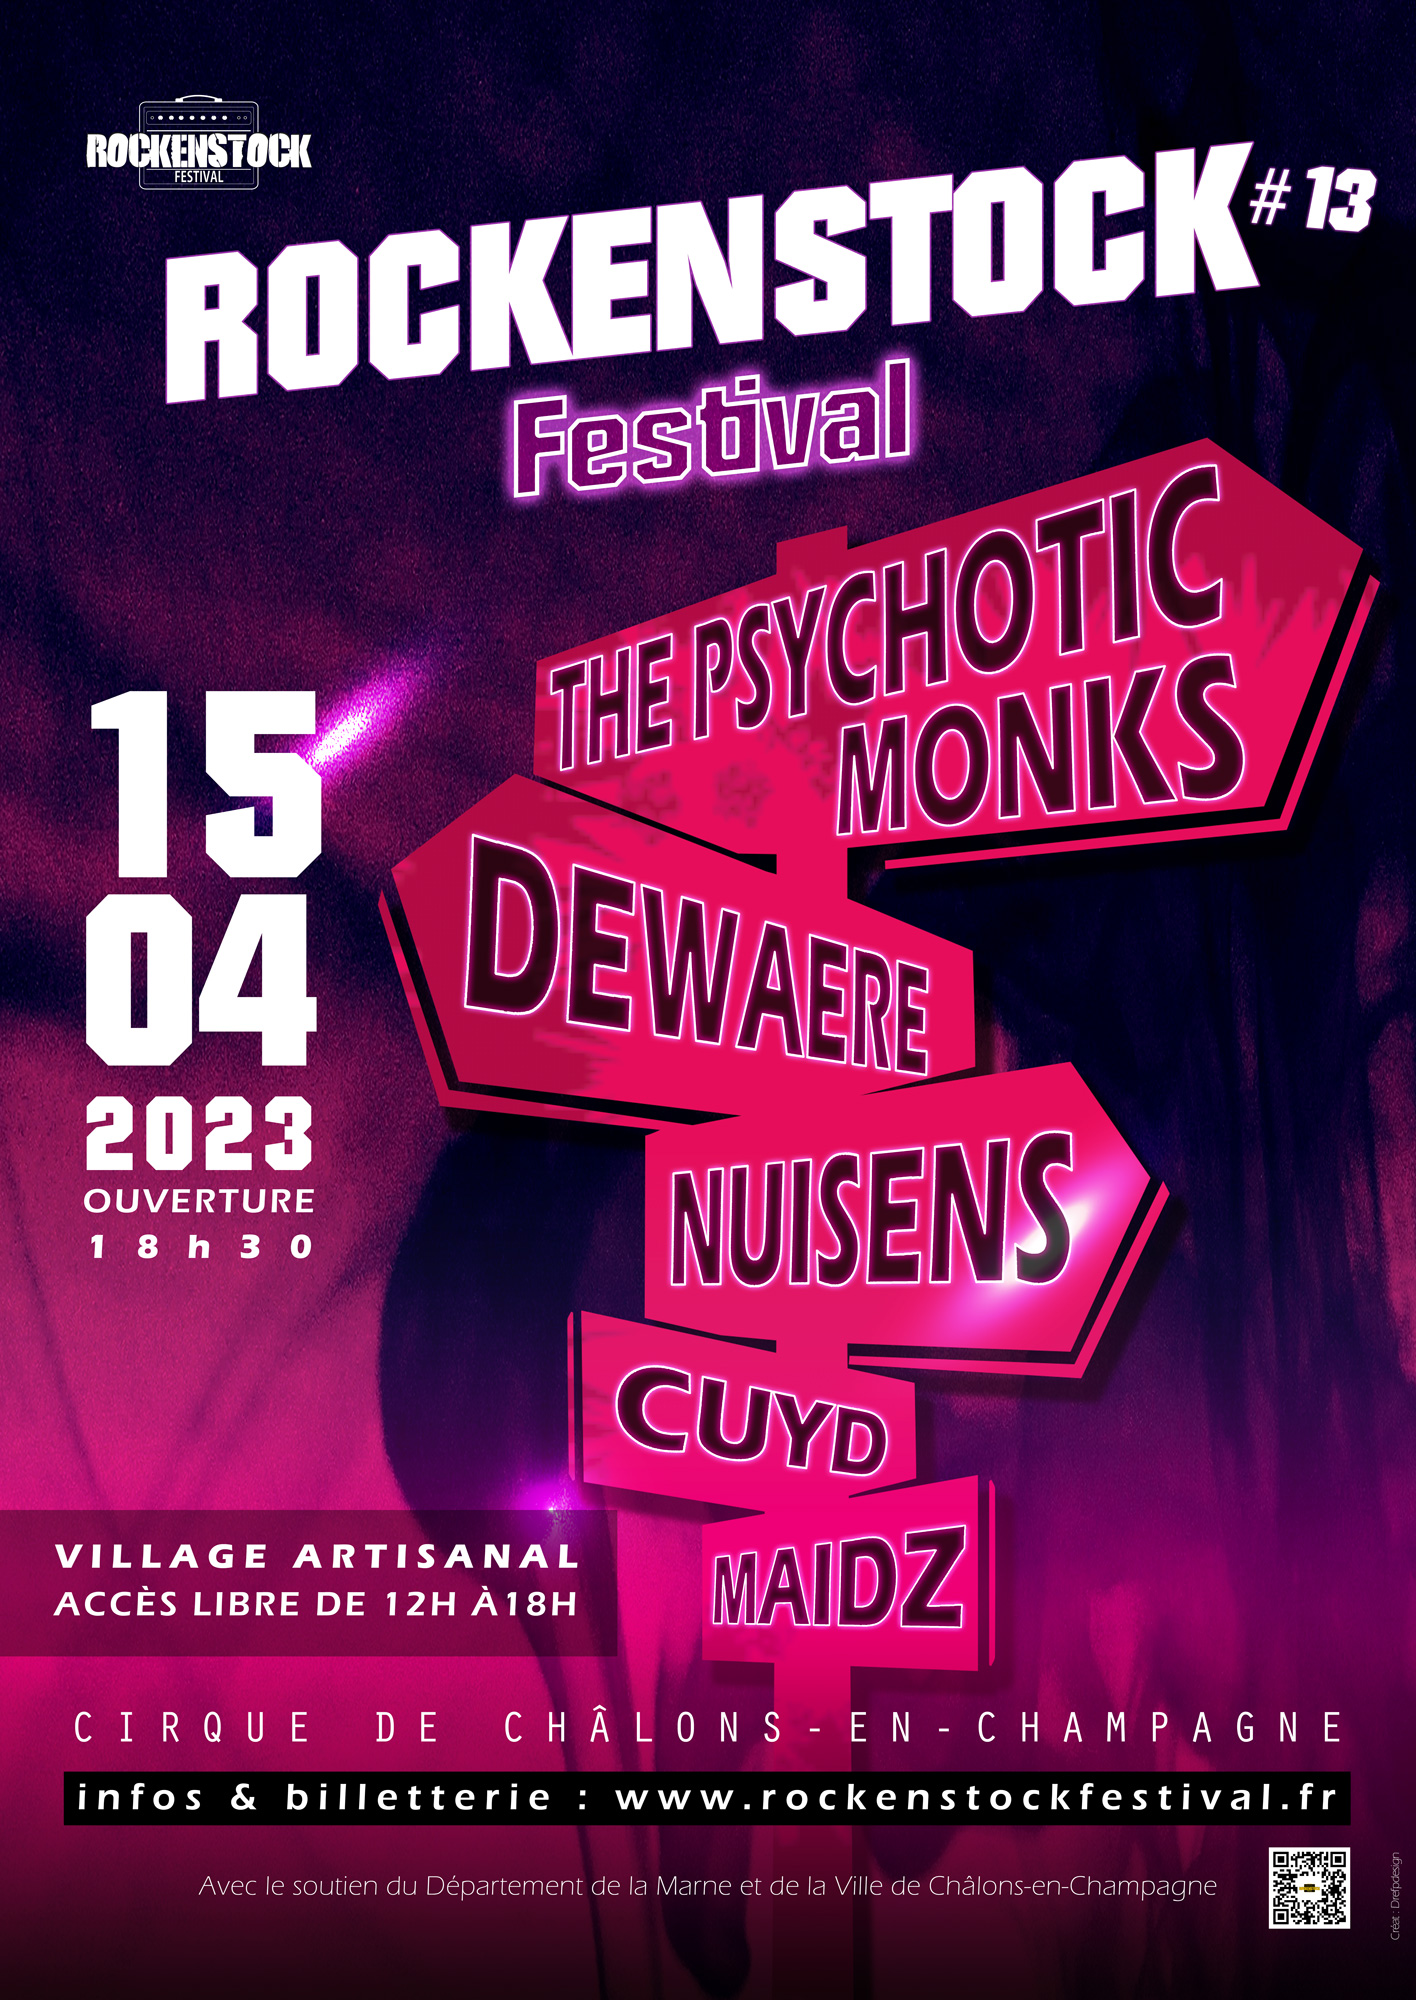 Le festival Rockenstock